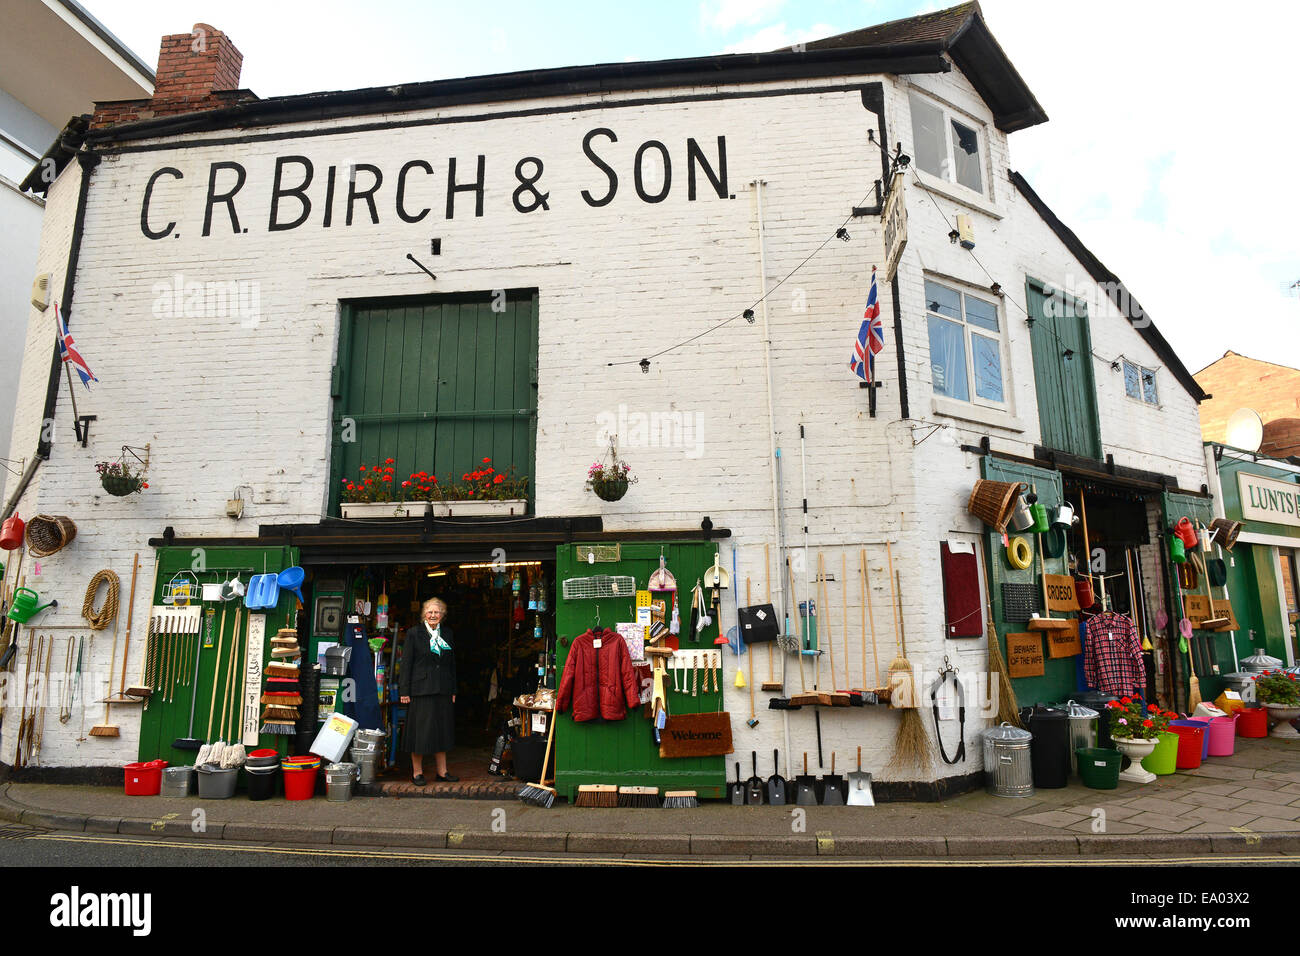 Margaruite Birch owner hardware and ironmongering ironmonger shop in Shrewsbury traditional old shops Britain Uk Stock Photo